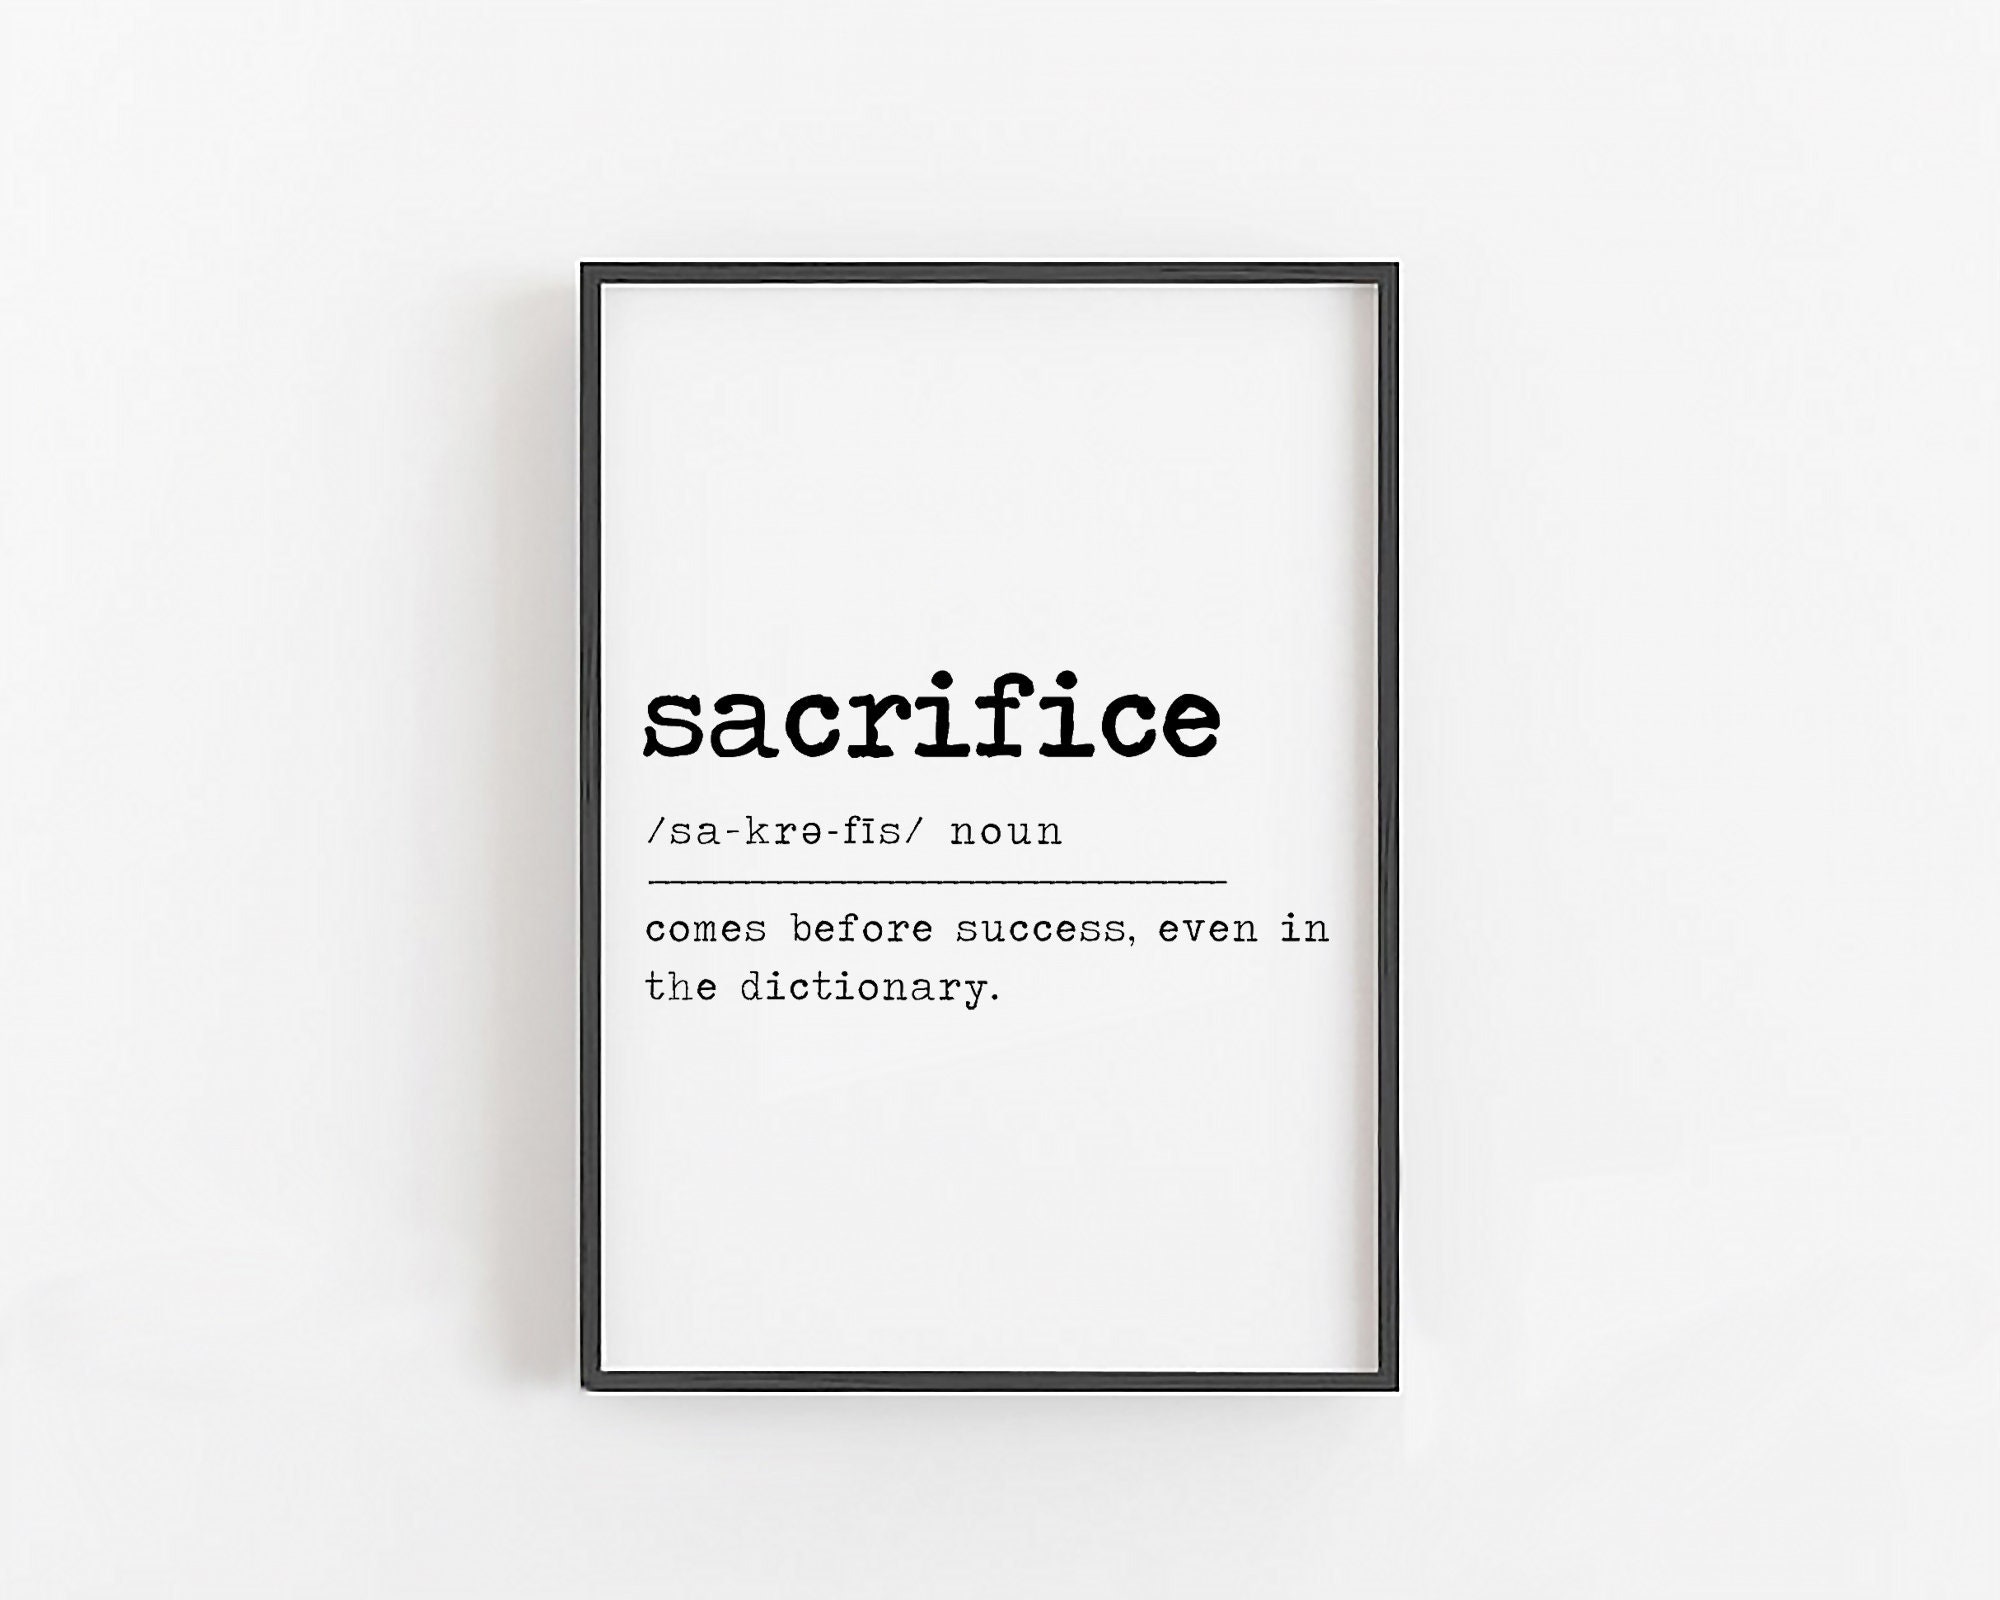  Sacrifice Song Lyric Vintage Quote Print : Office